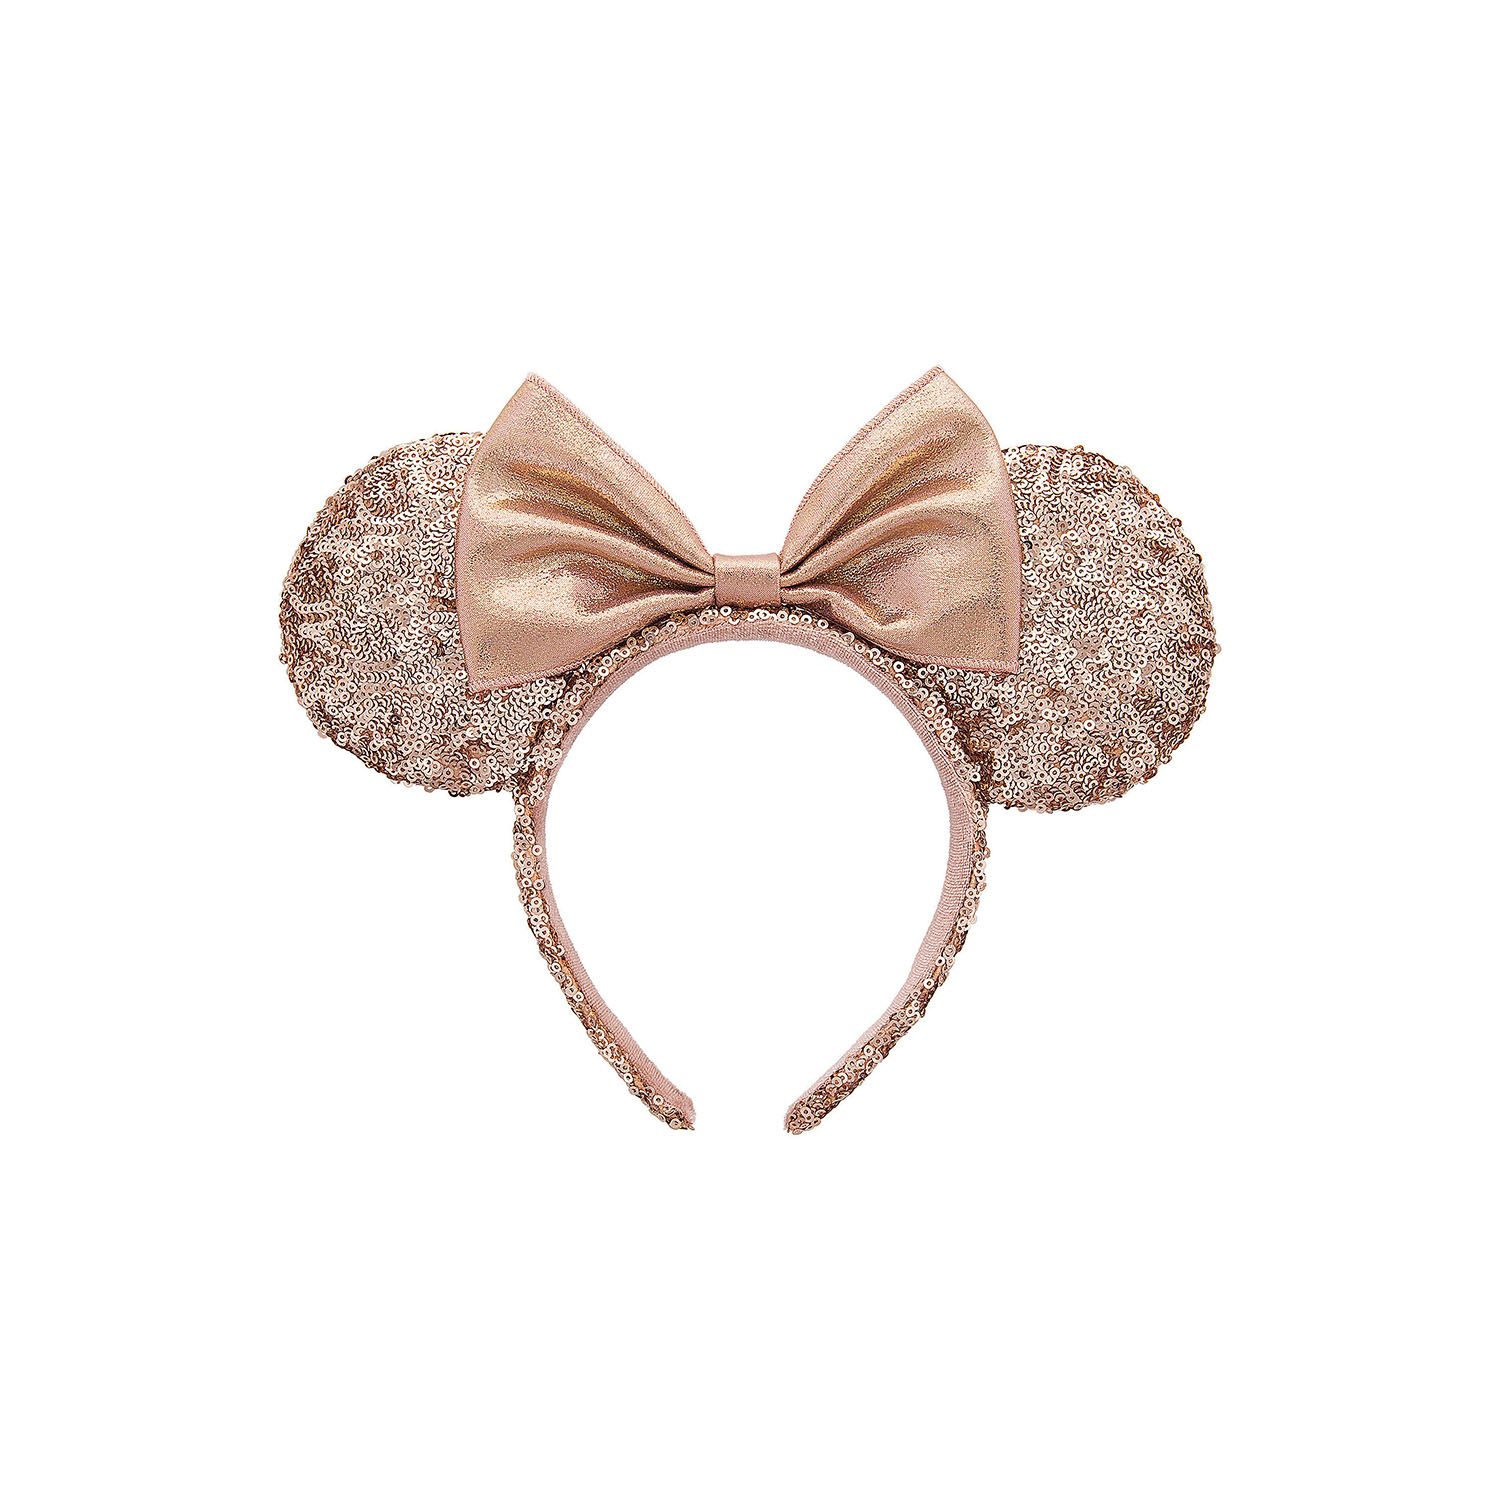 Roséguld Minnie Mouse öron finns nu i Disney Store